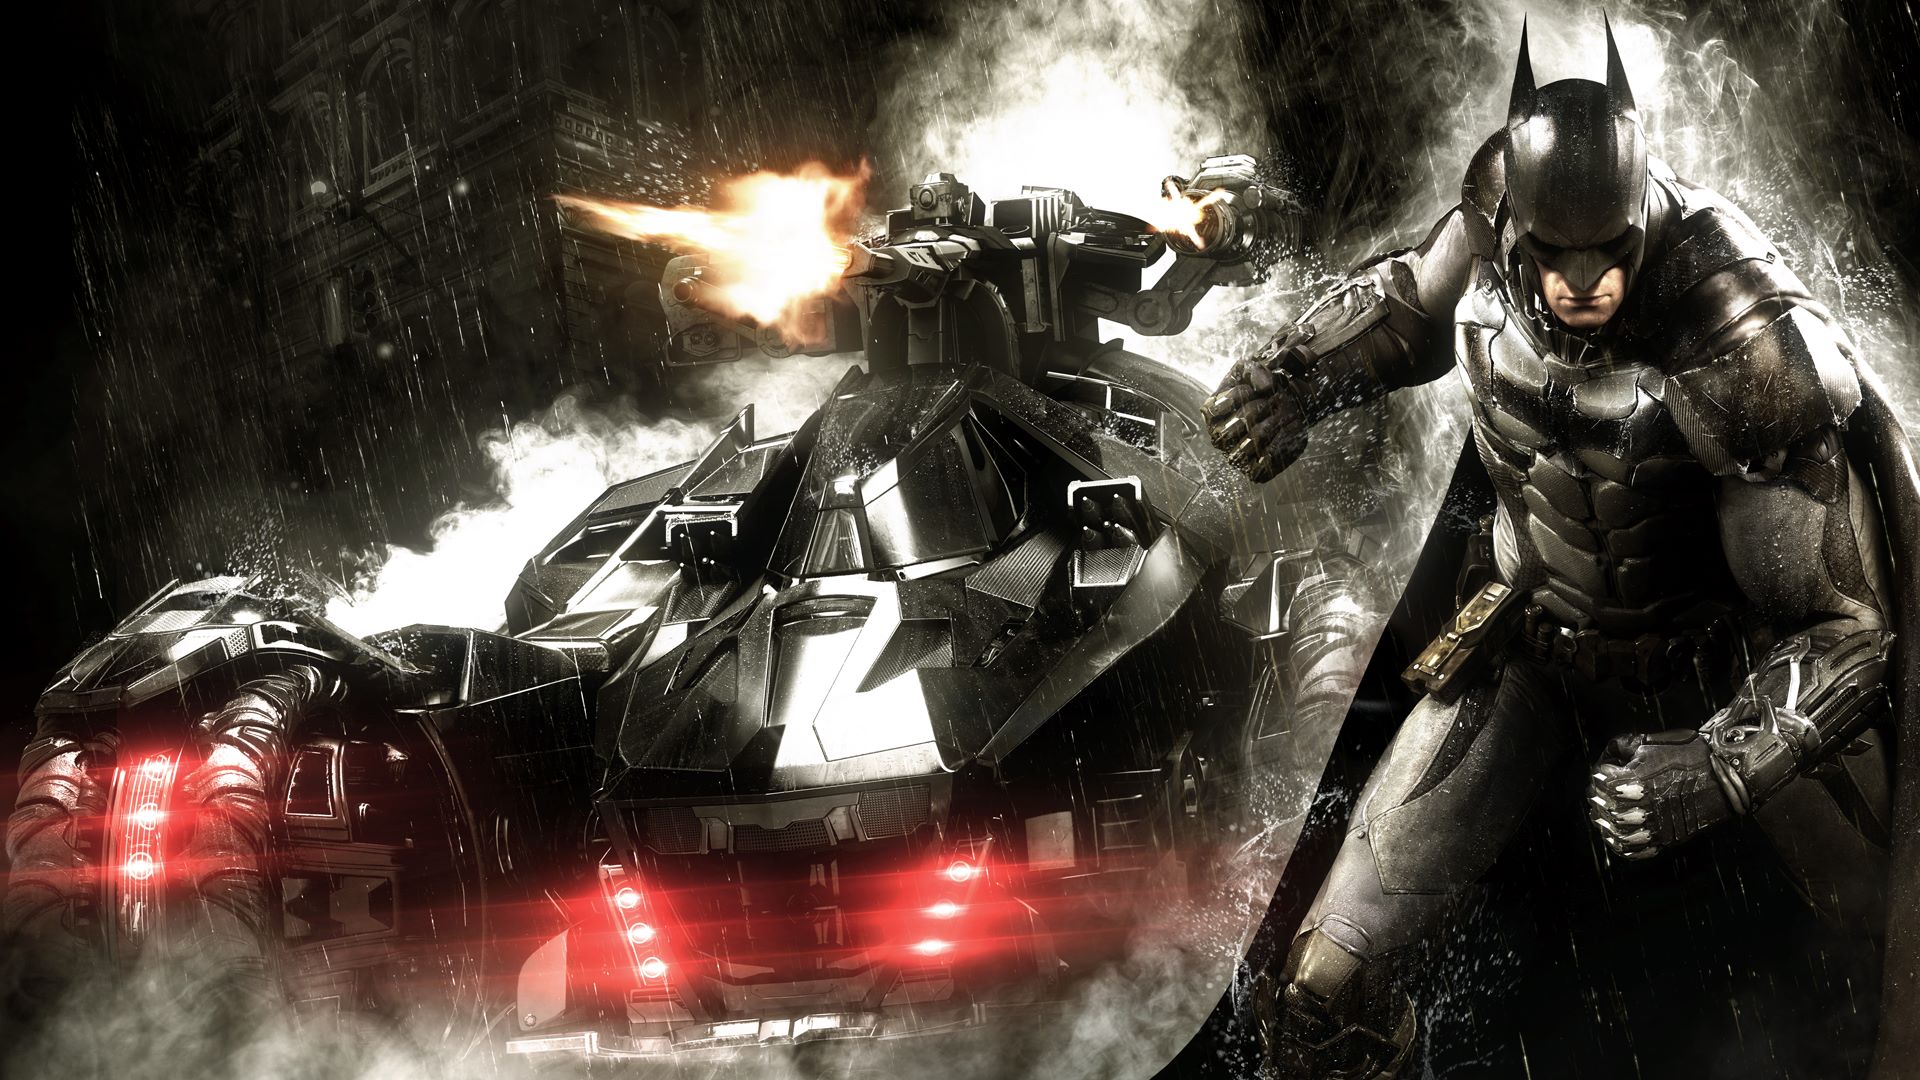 Canceled Batman Arkham Knight Sequel Concept Art and Details Leaked